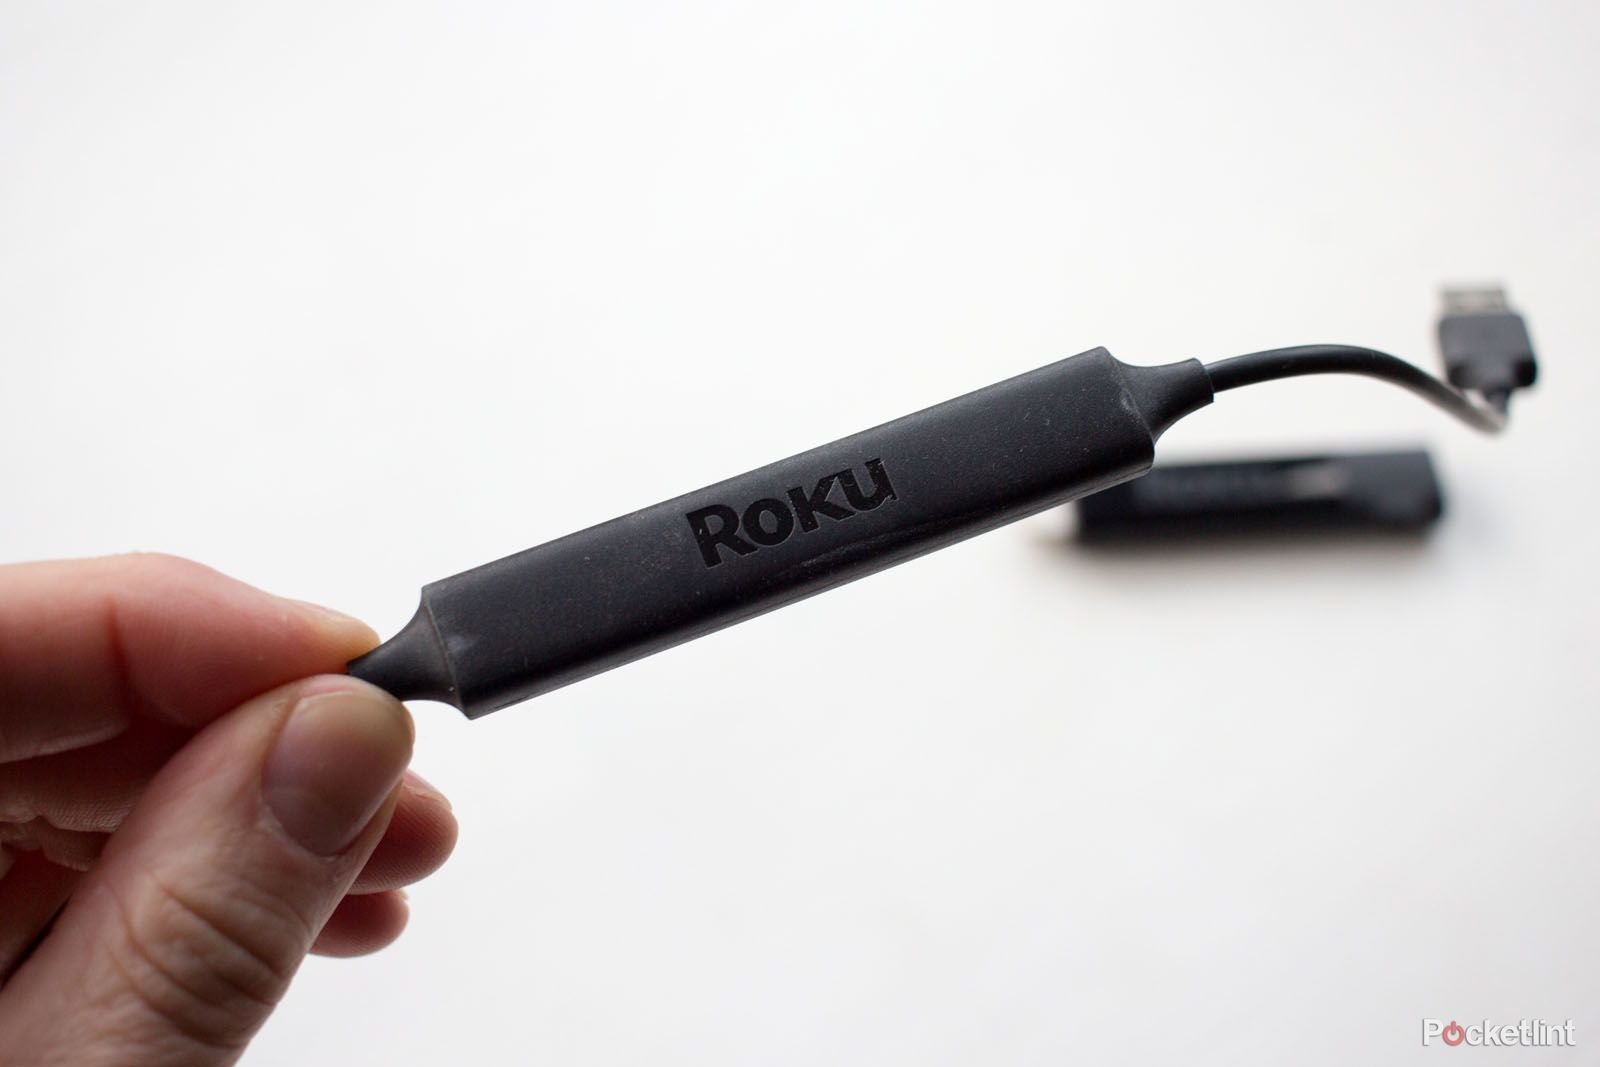 Roku Streaming Stick image 3